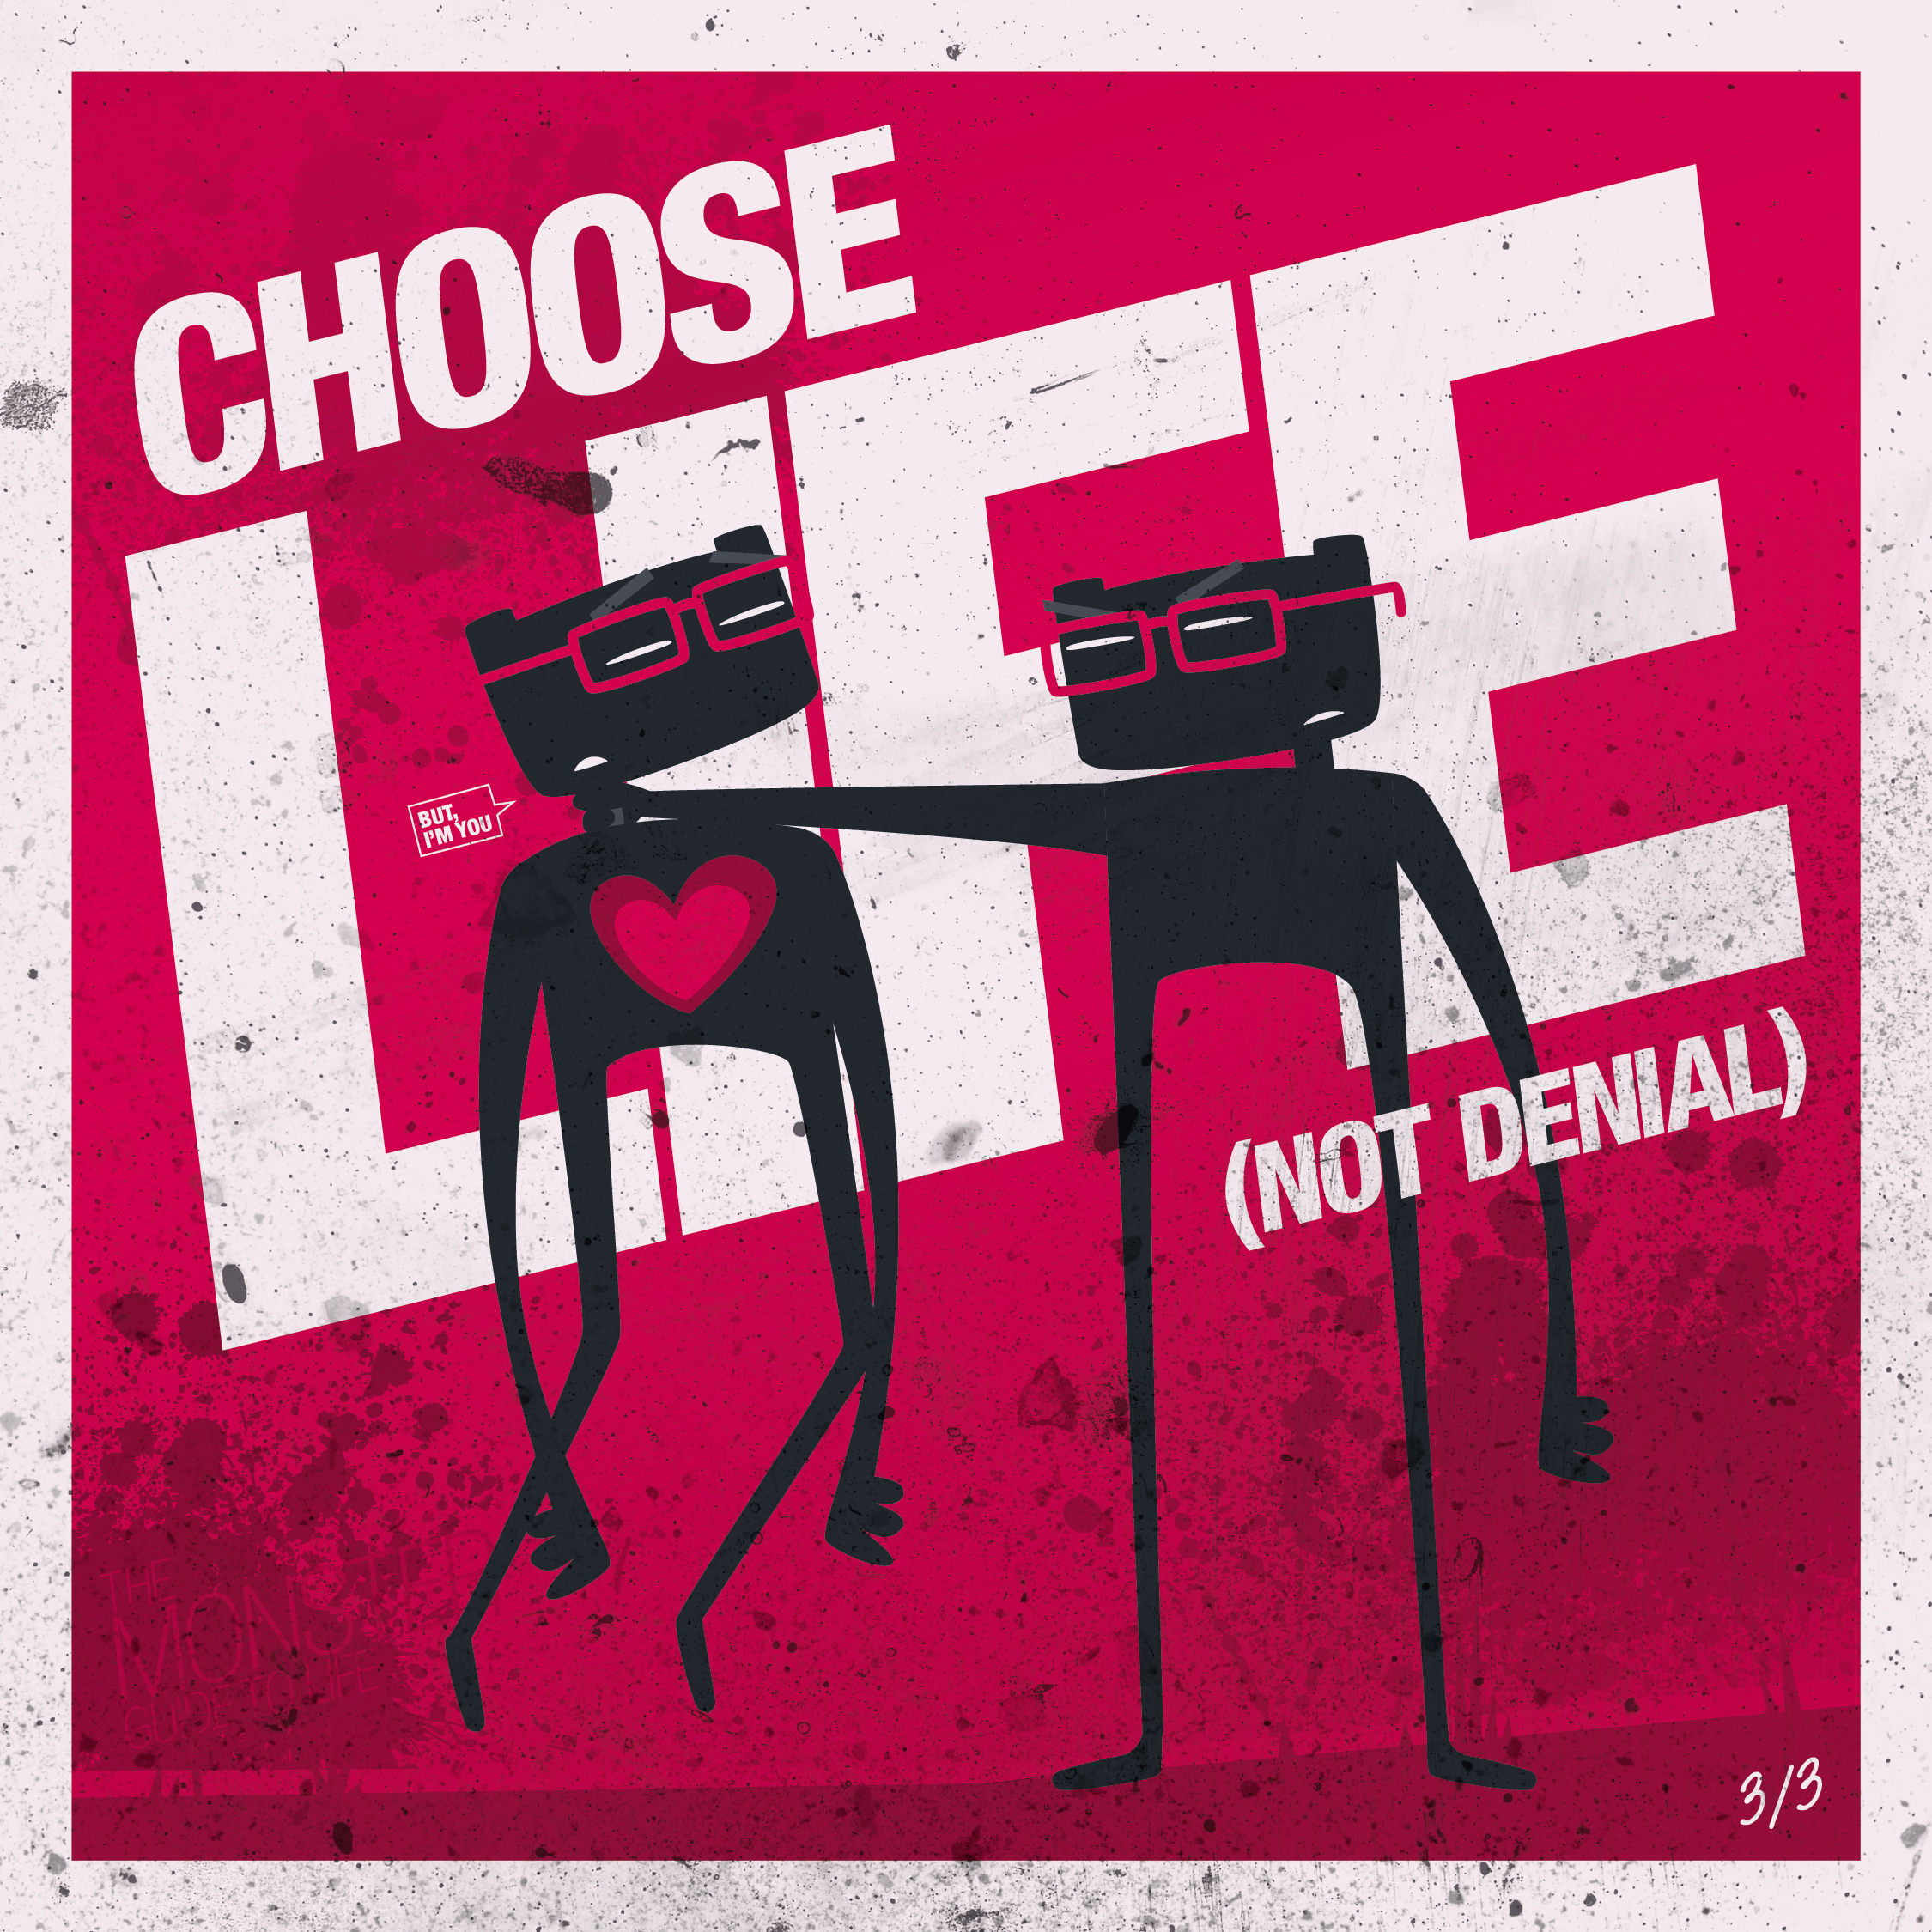 Choose life (not denial)